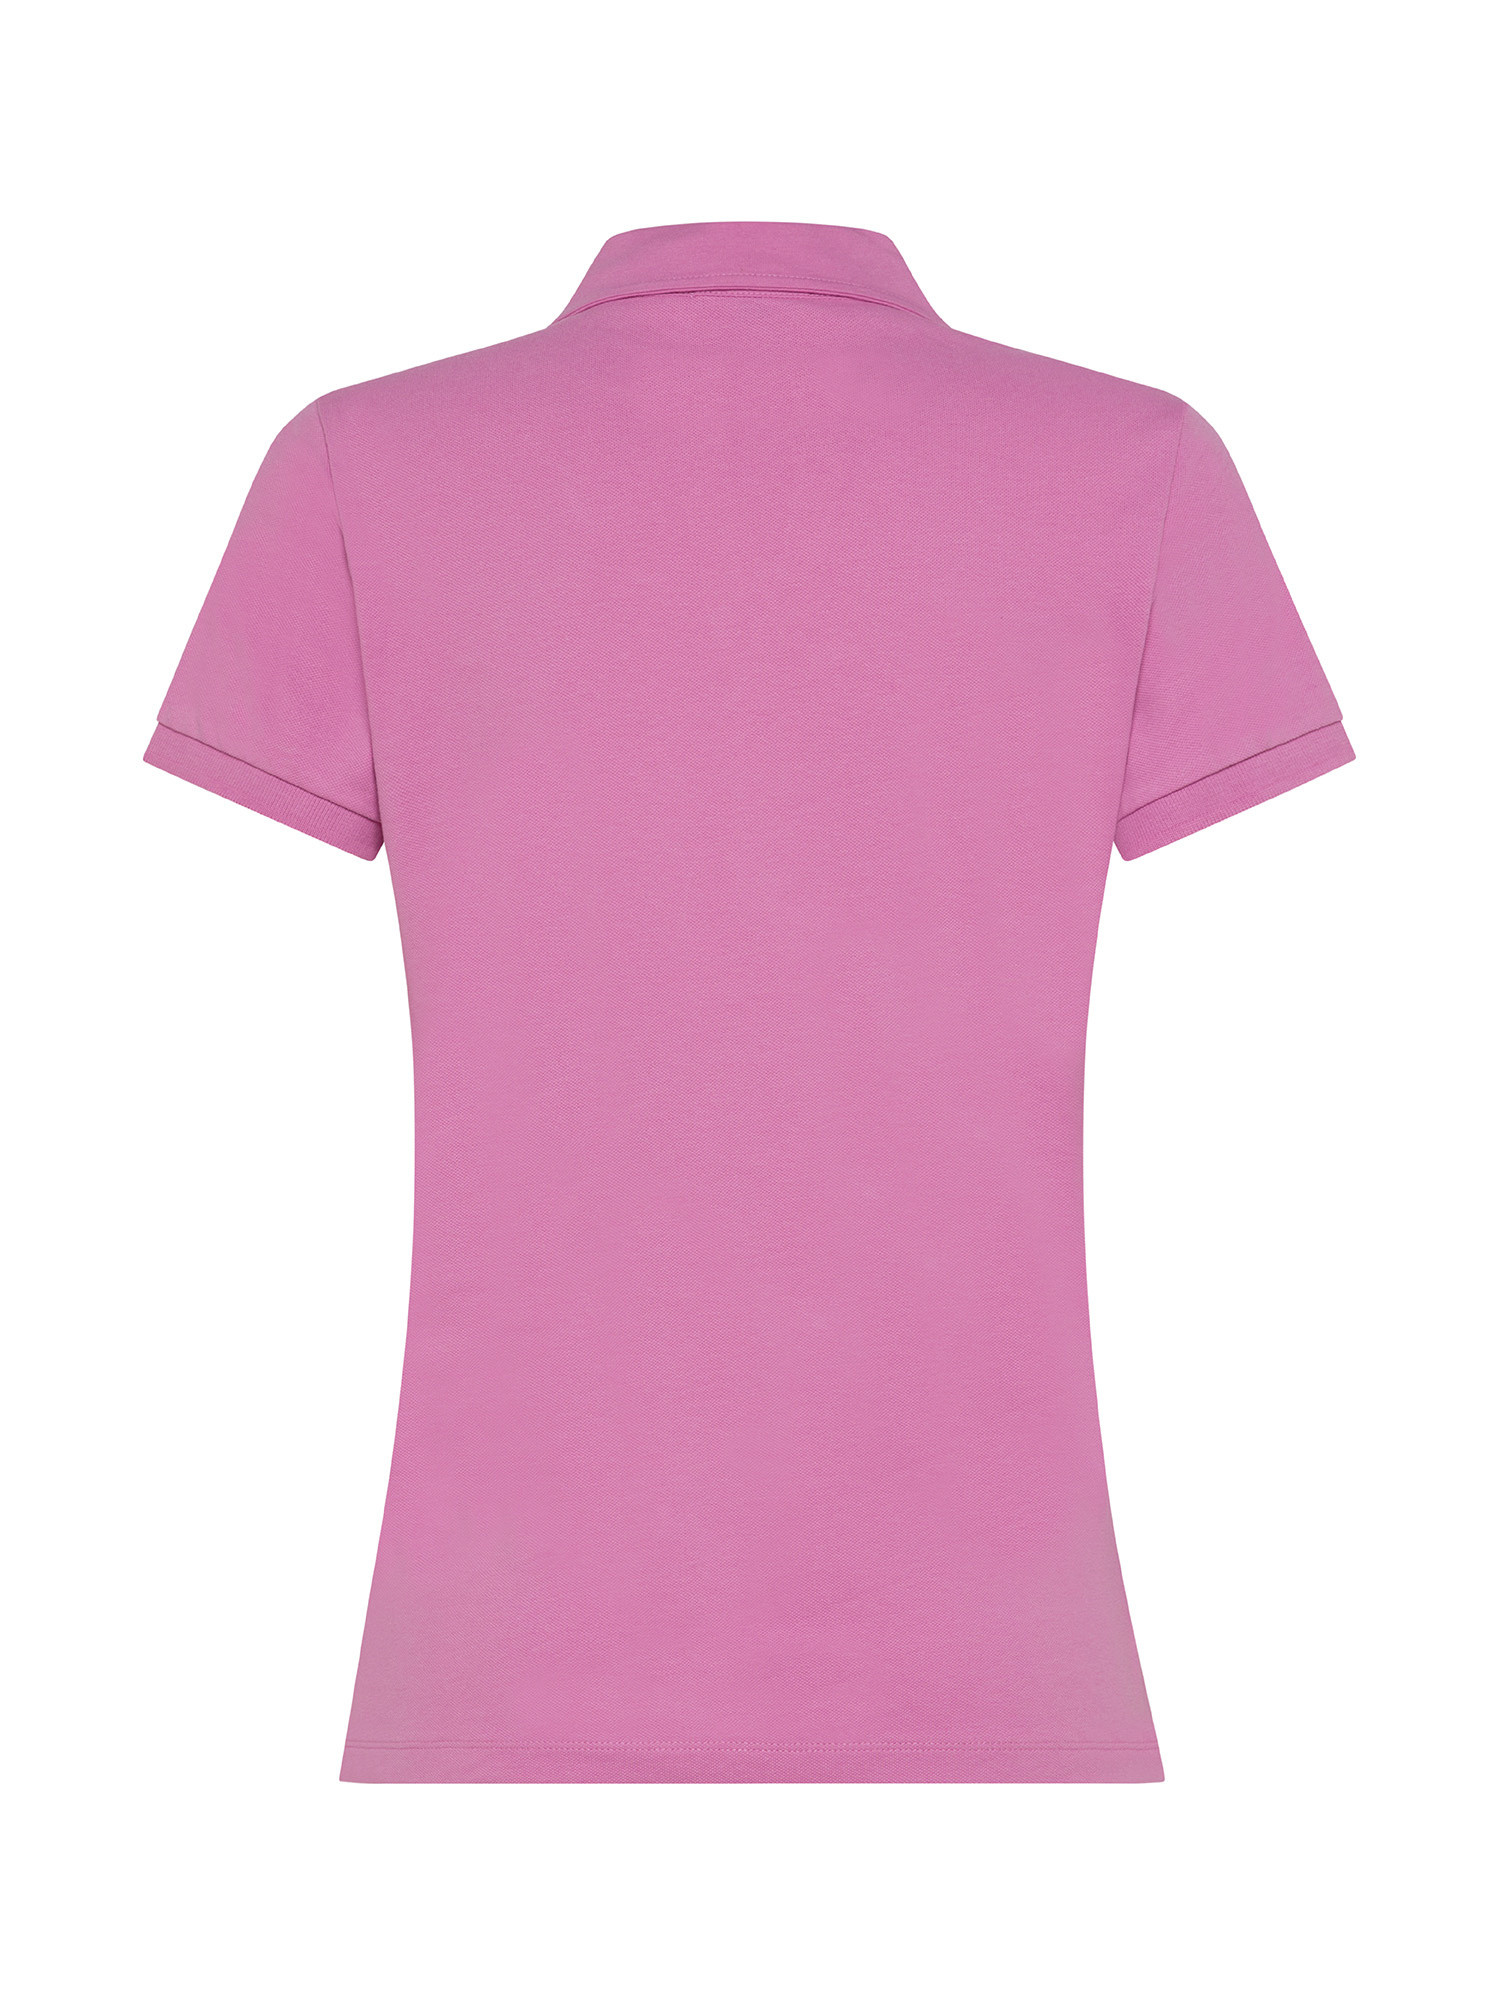 Koan - T-shirt with ruffles, Dark Pink, large image number 1